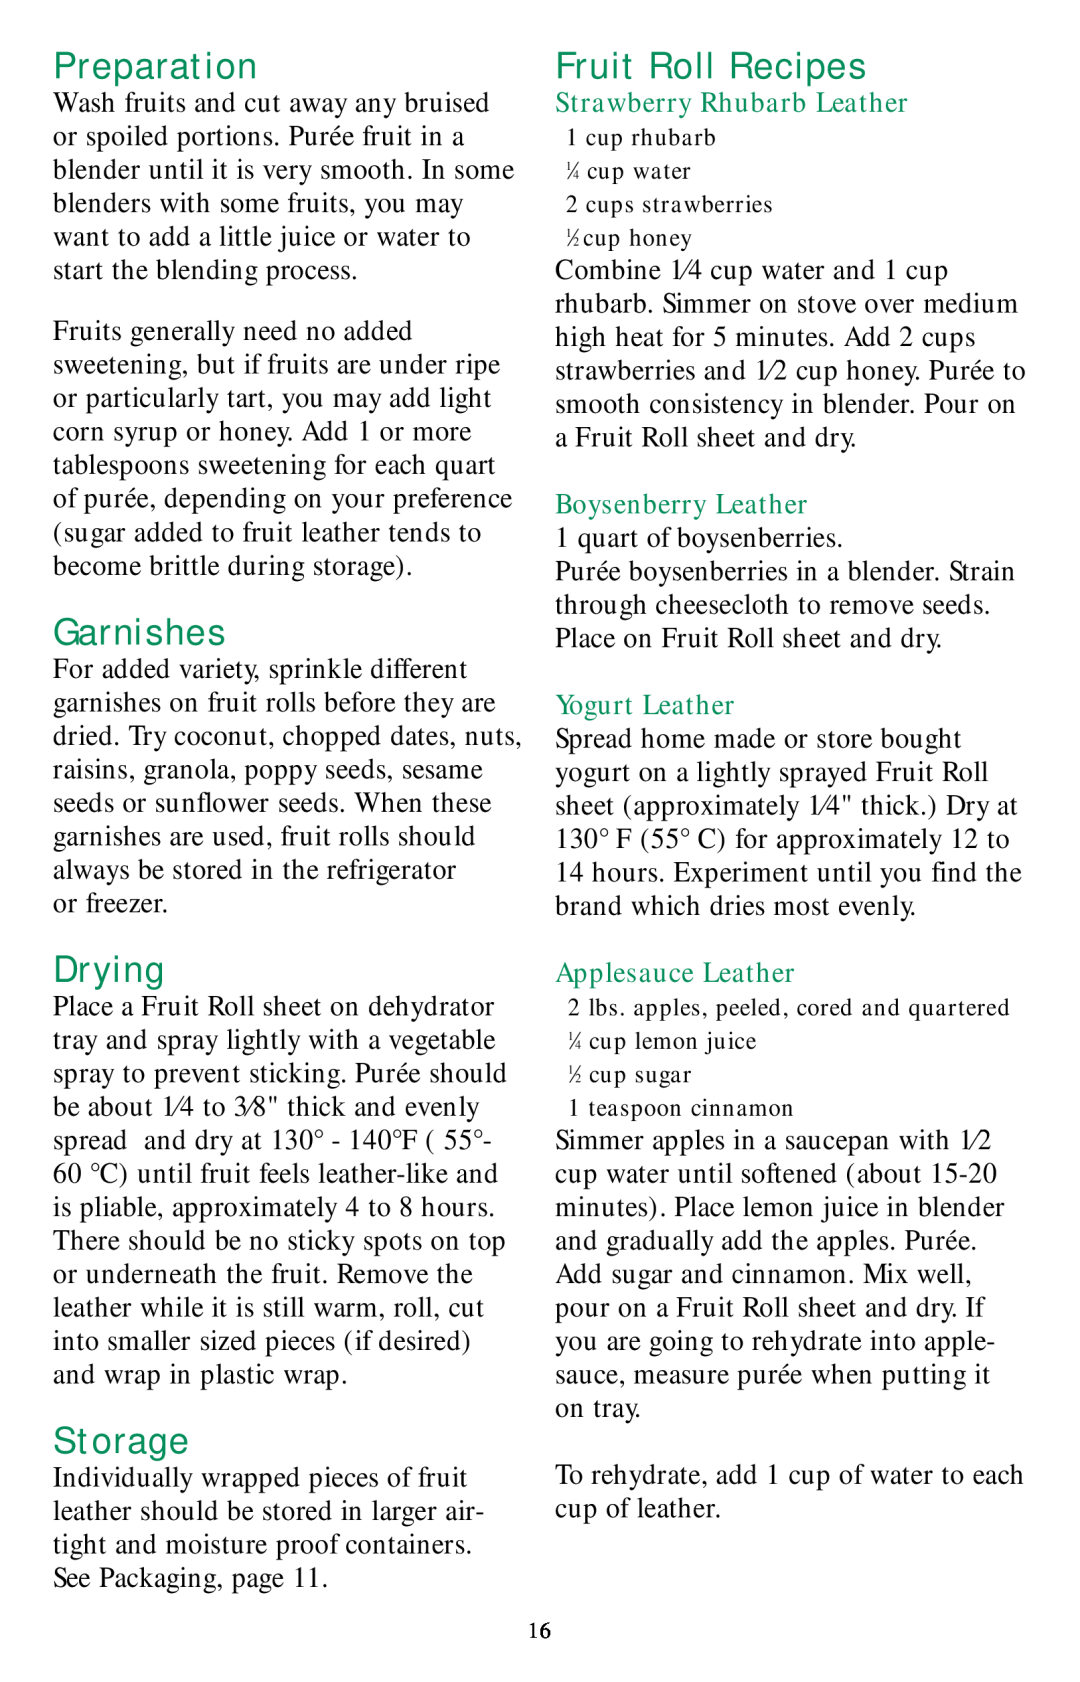 Nesco Food Dehydrator manual Garnishes, Drying, Storage, Fruit Roll Recipes, Preparation, Strawberry Rhubarb Leather 